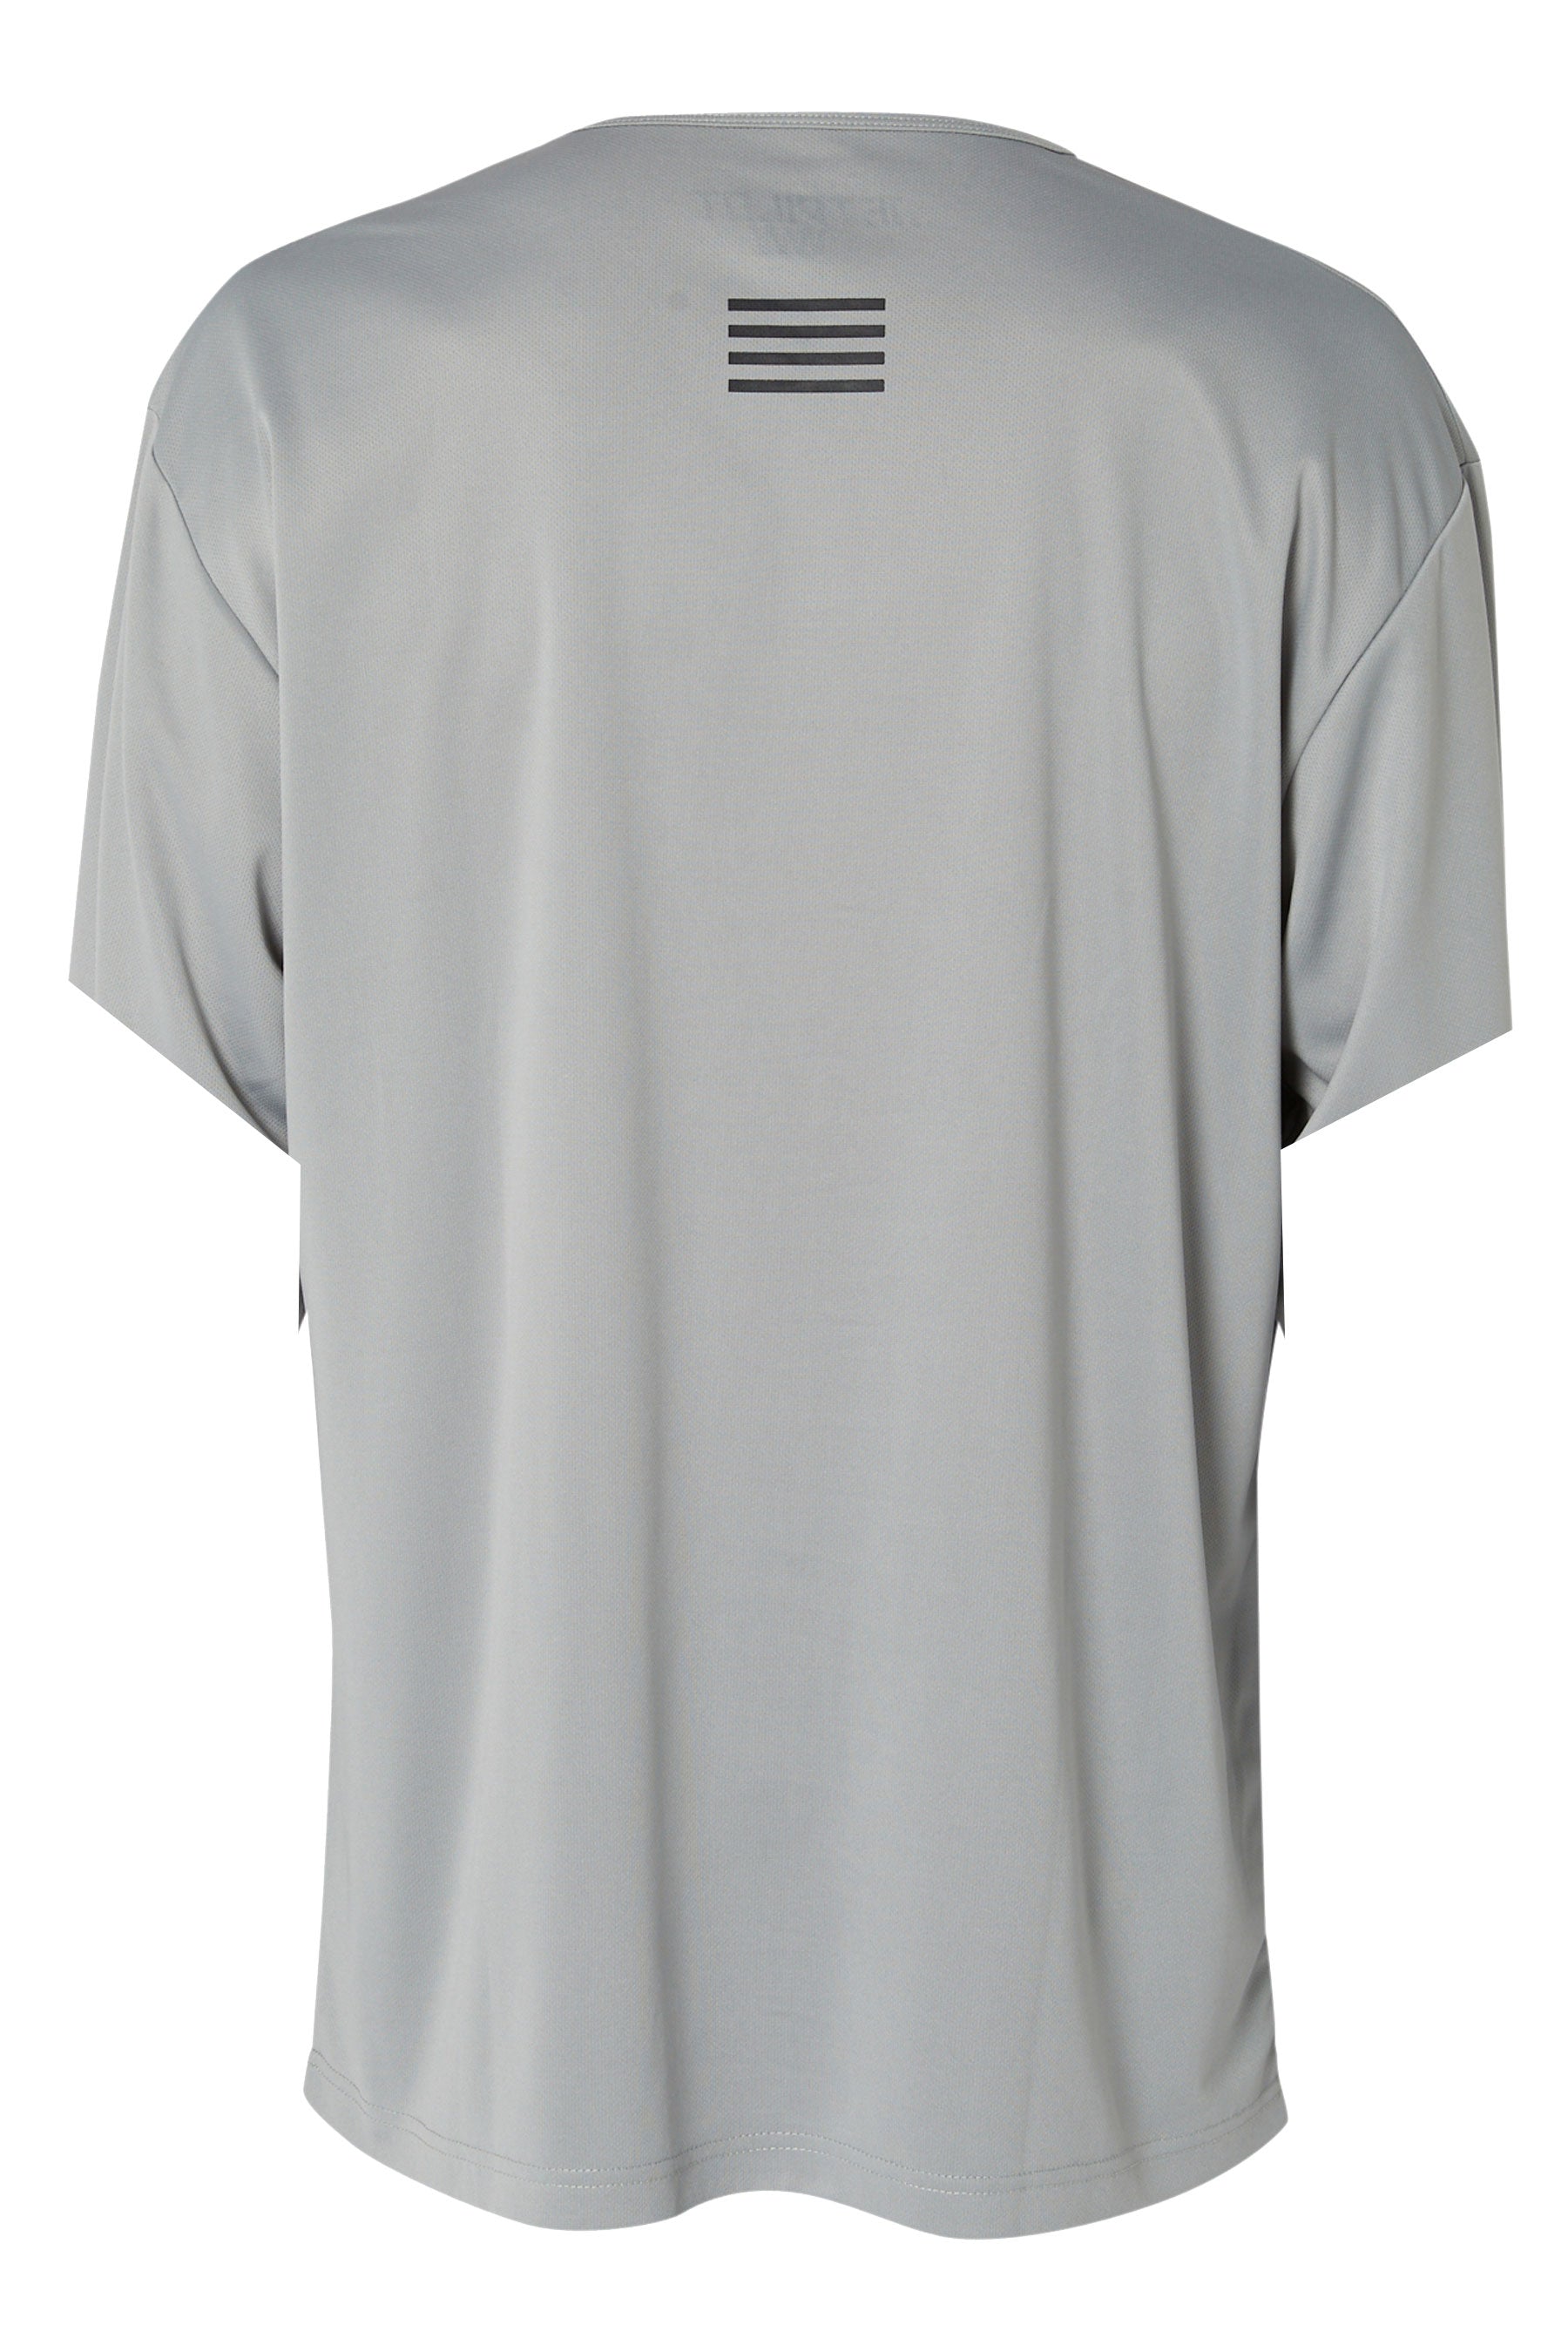 Rx Vault Mens Hydro Short Sleeve T-Shirt Grey 2